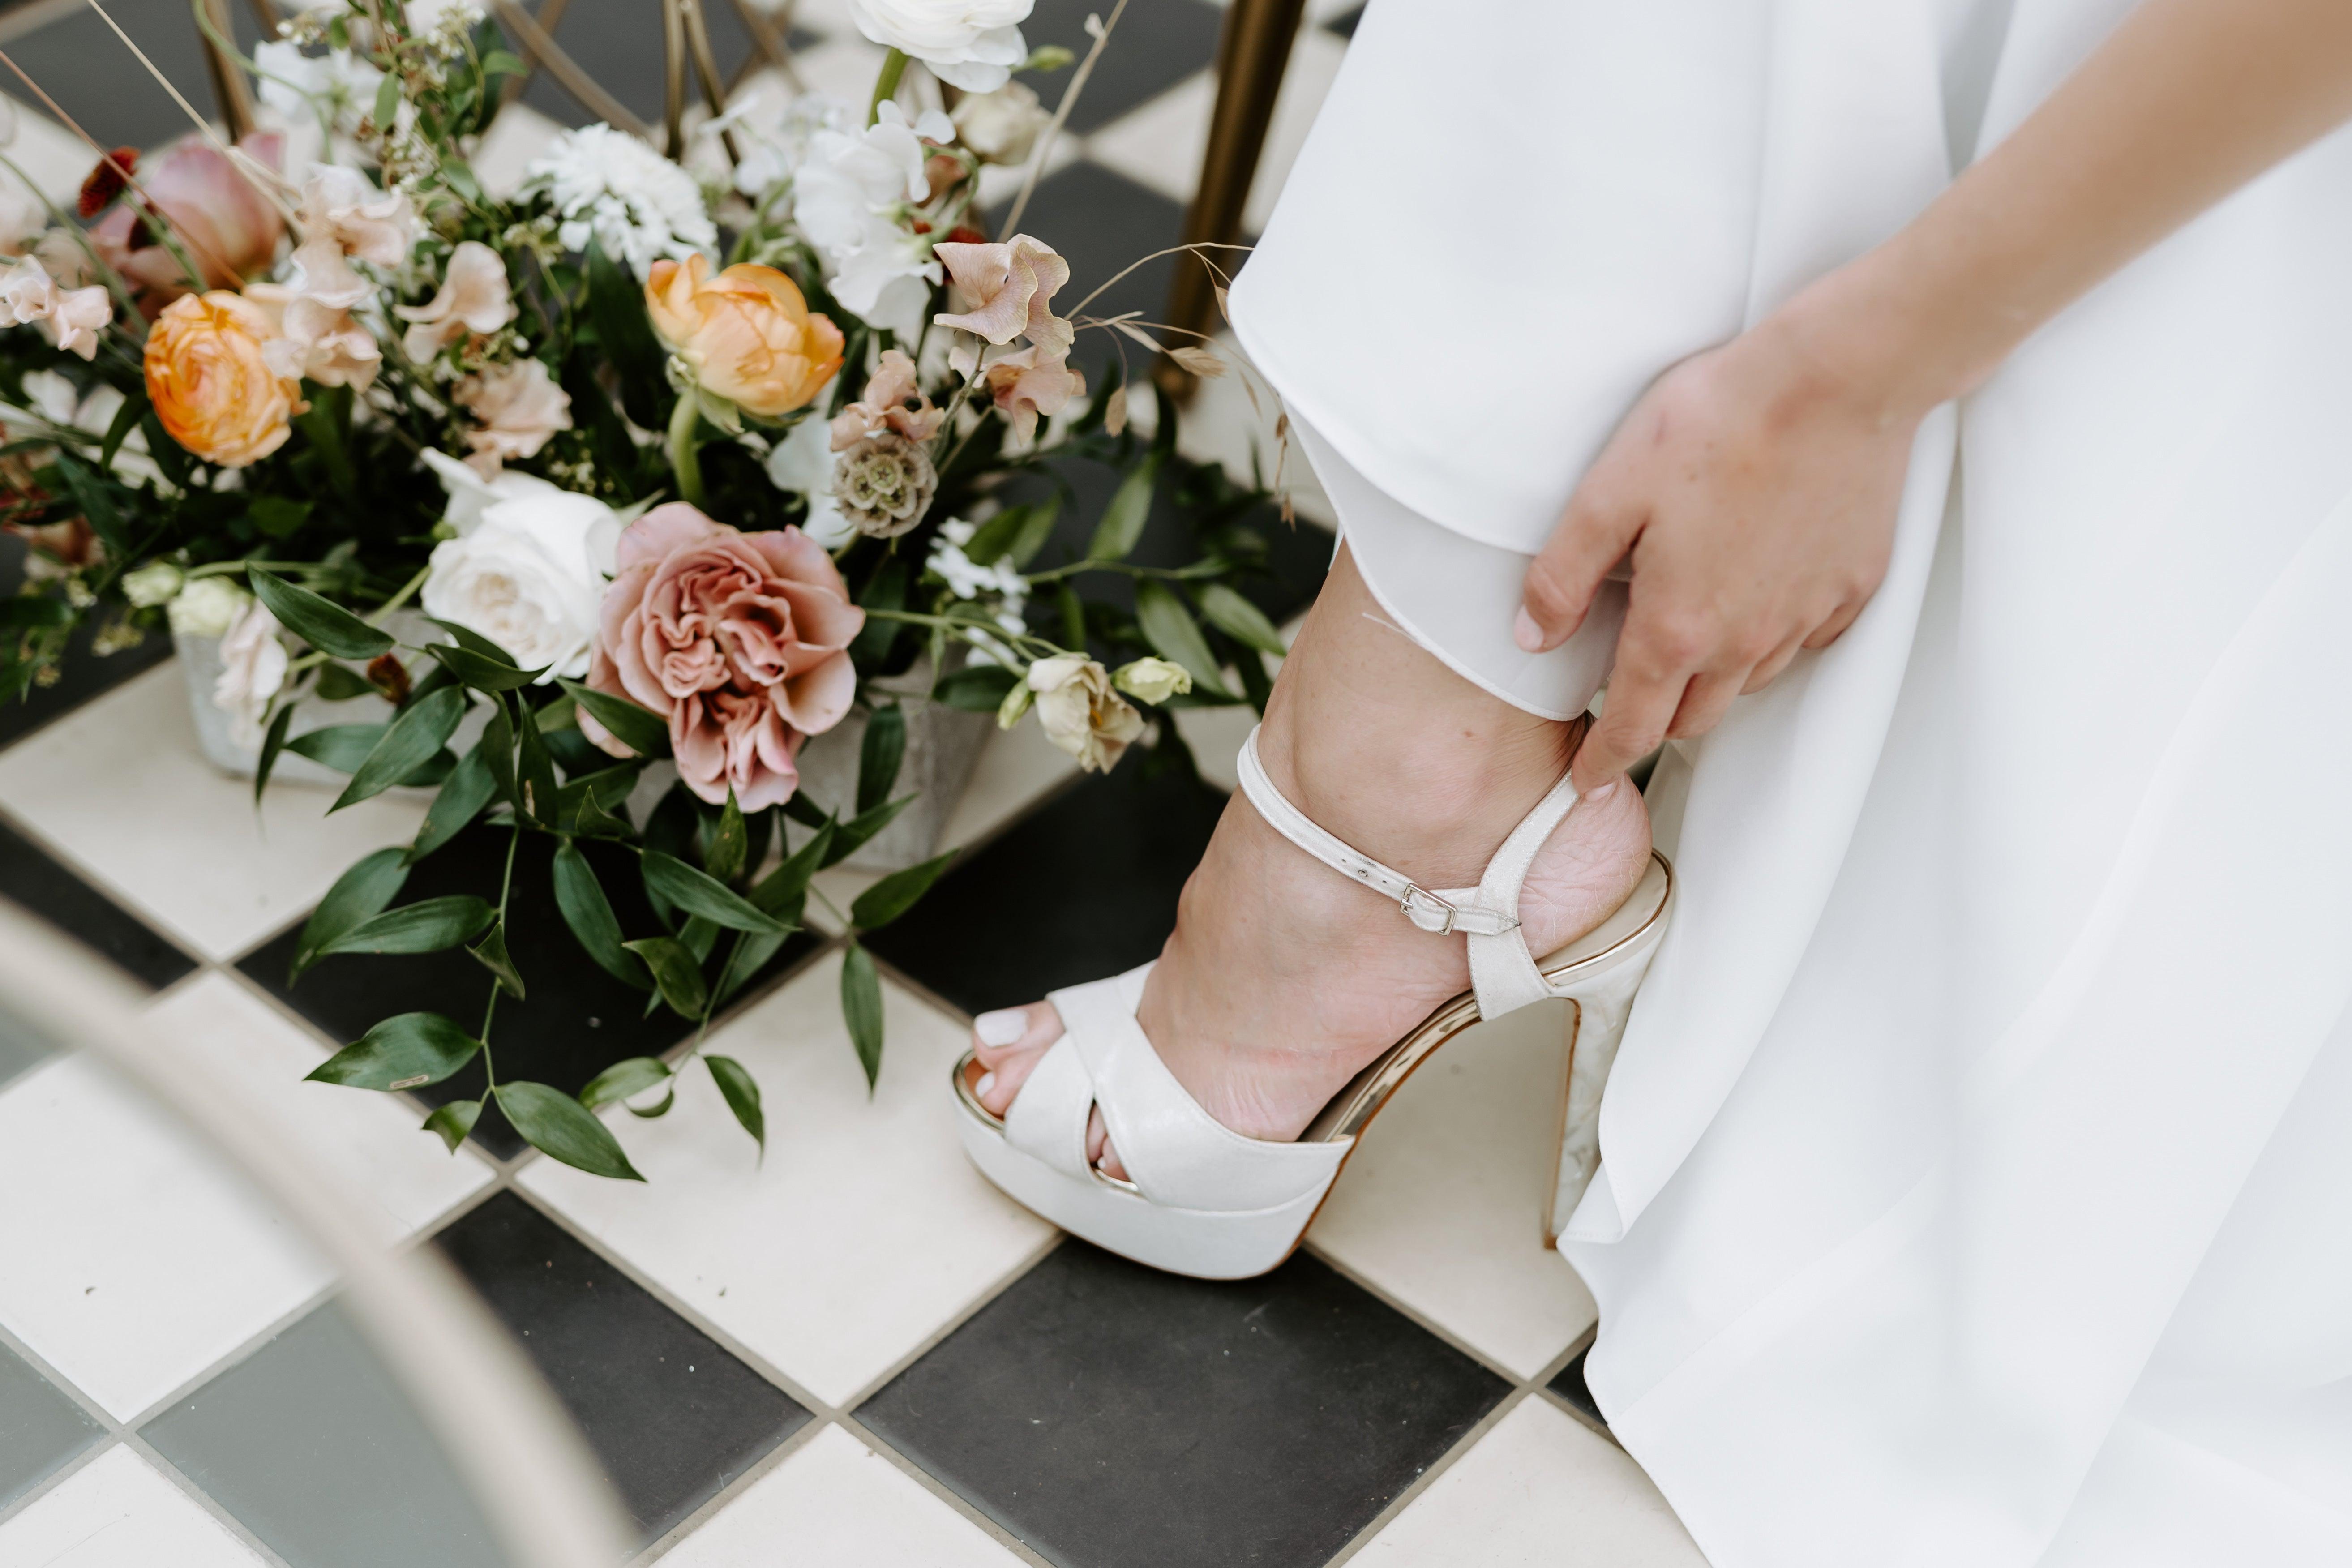 Wedding Shoes You'll Swoon Over - Modern Wedding